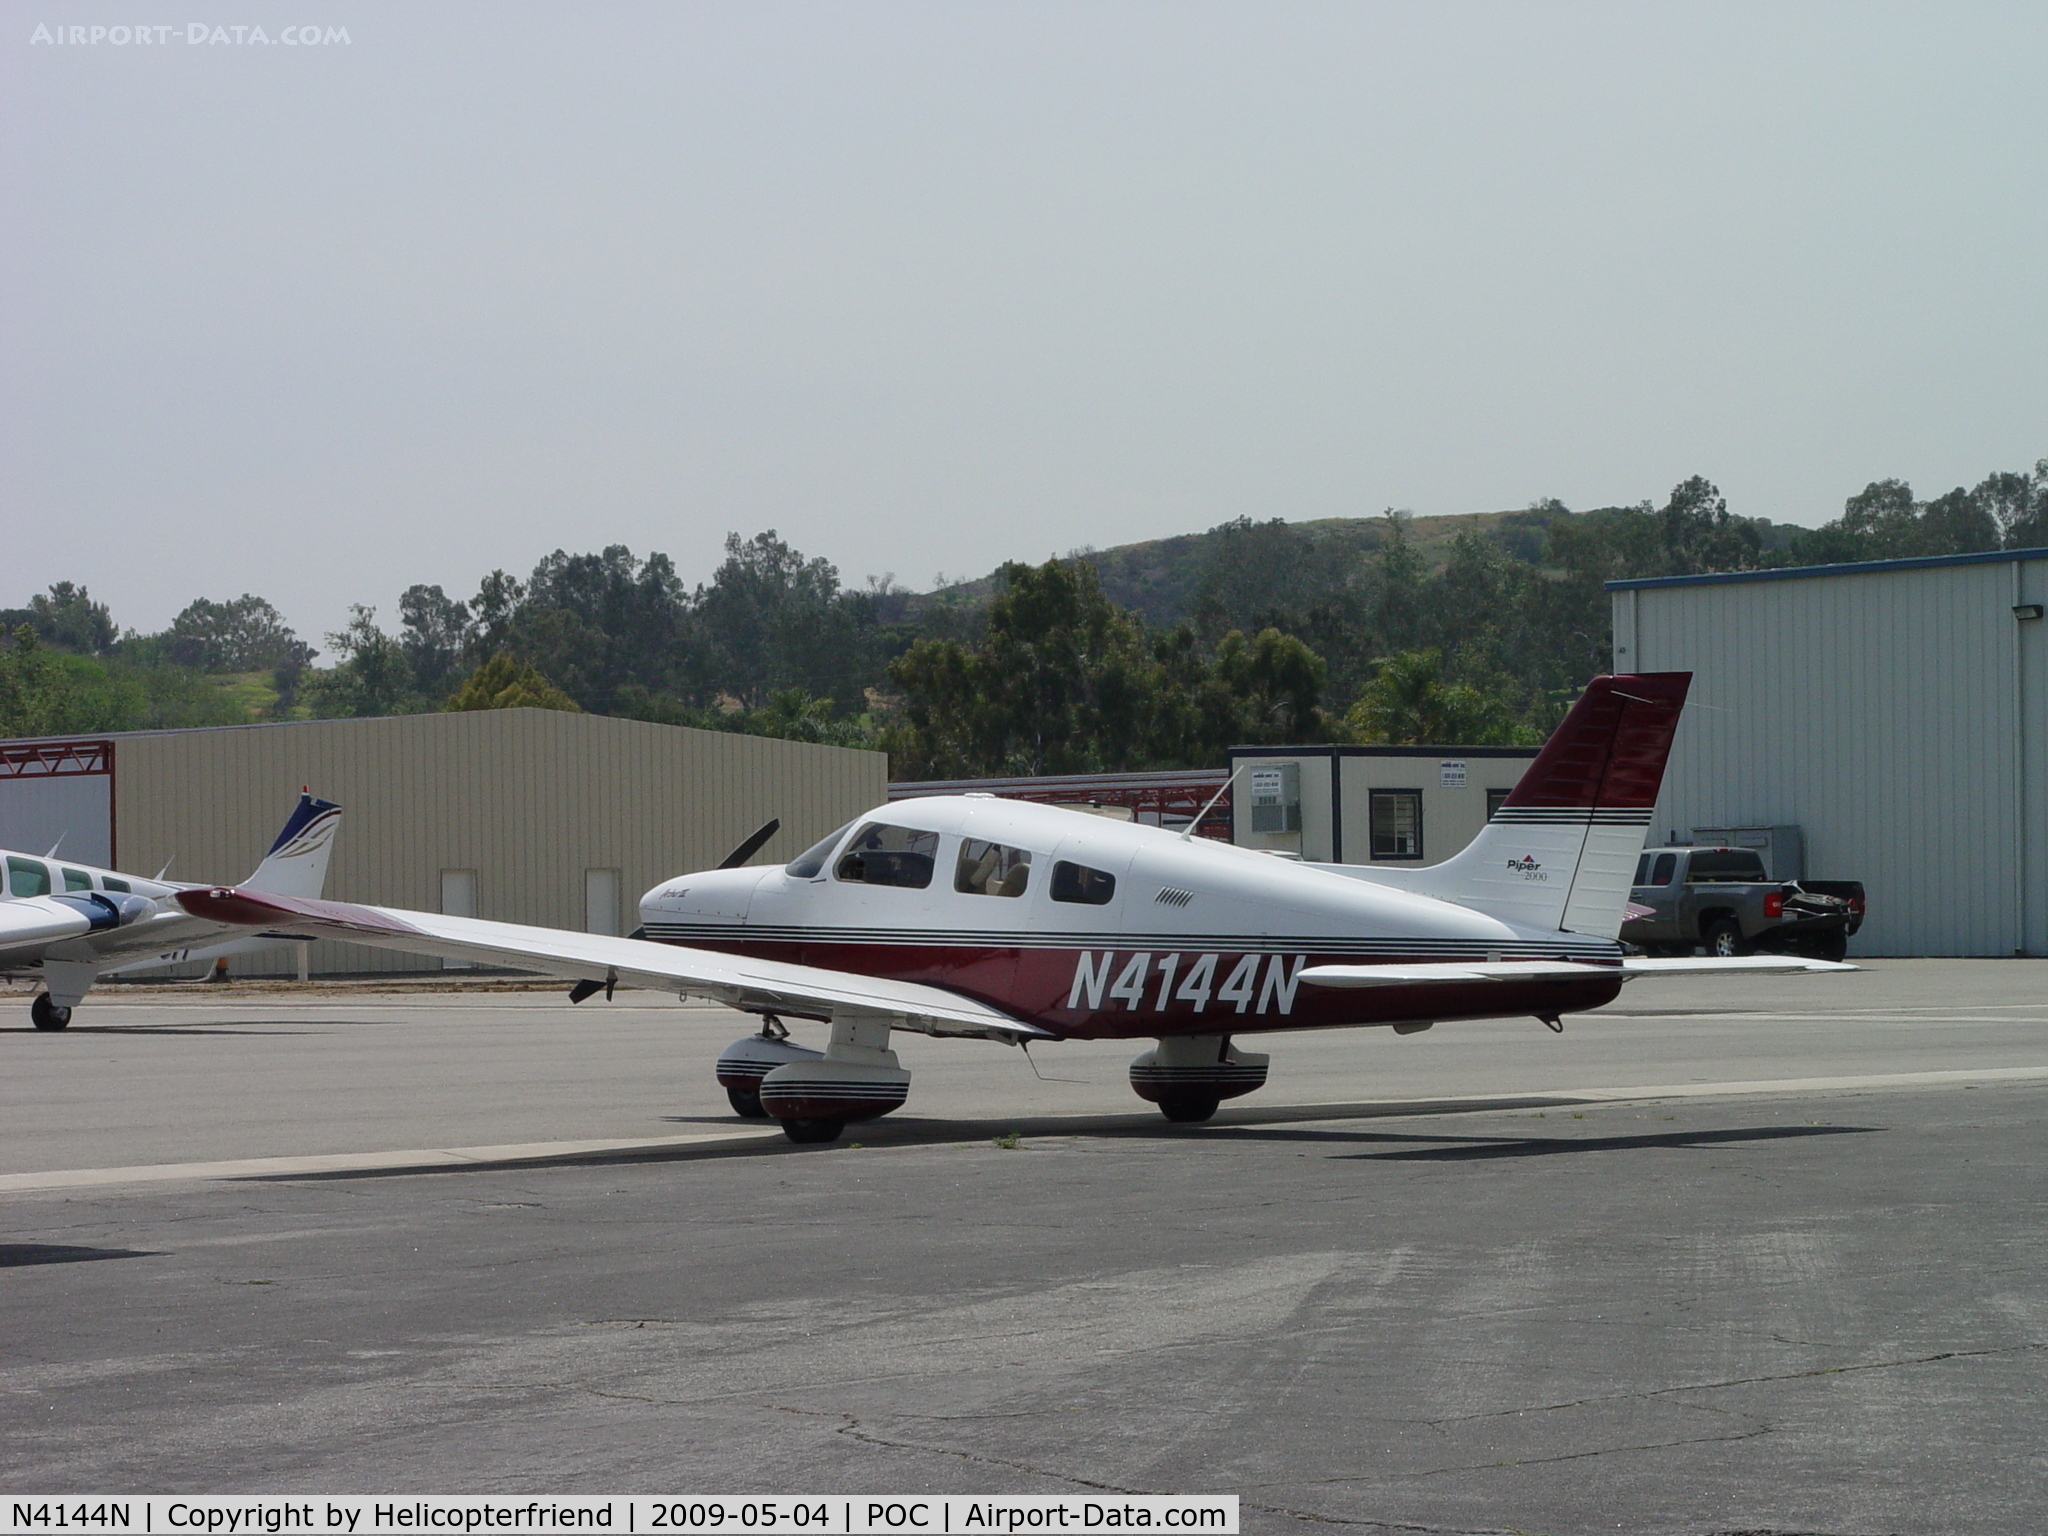 N4144N, 2000 Piper PA-28-181 Cherokee Archer III C/N 2843361, Parked near Howard Aviation